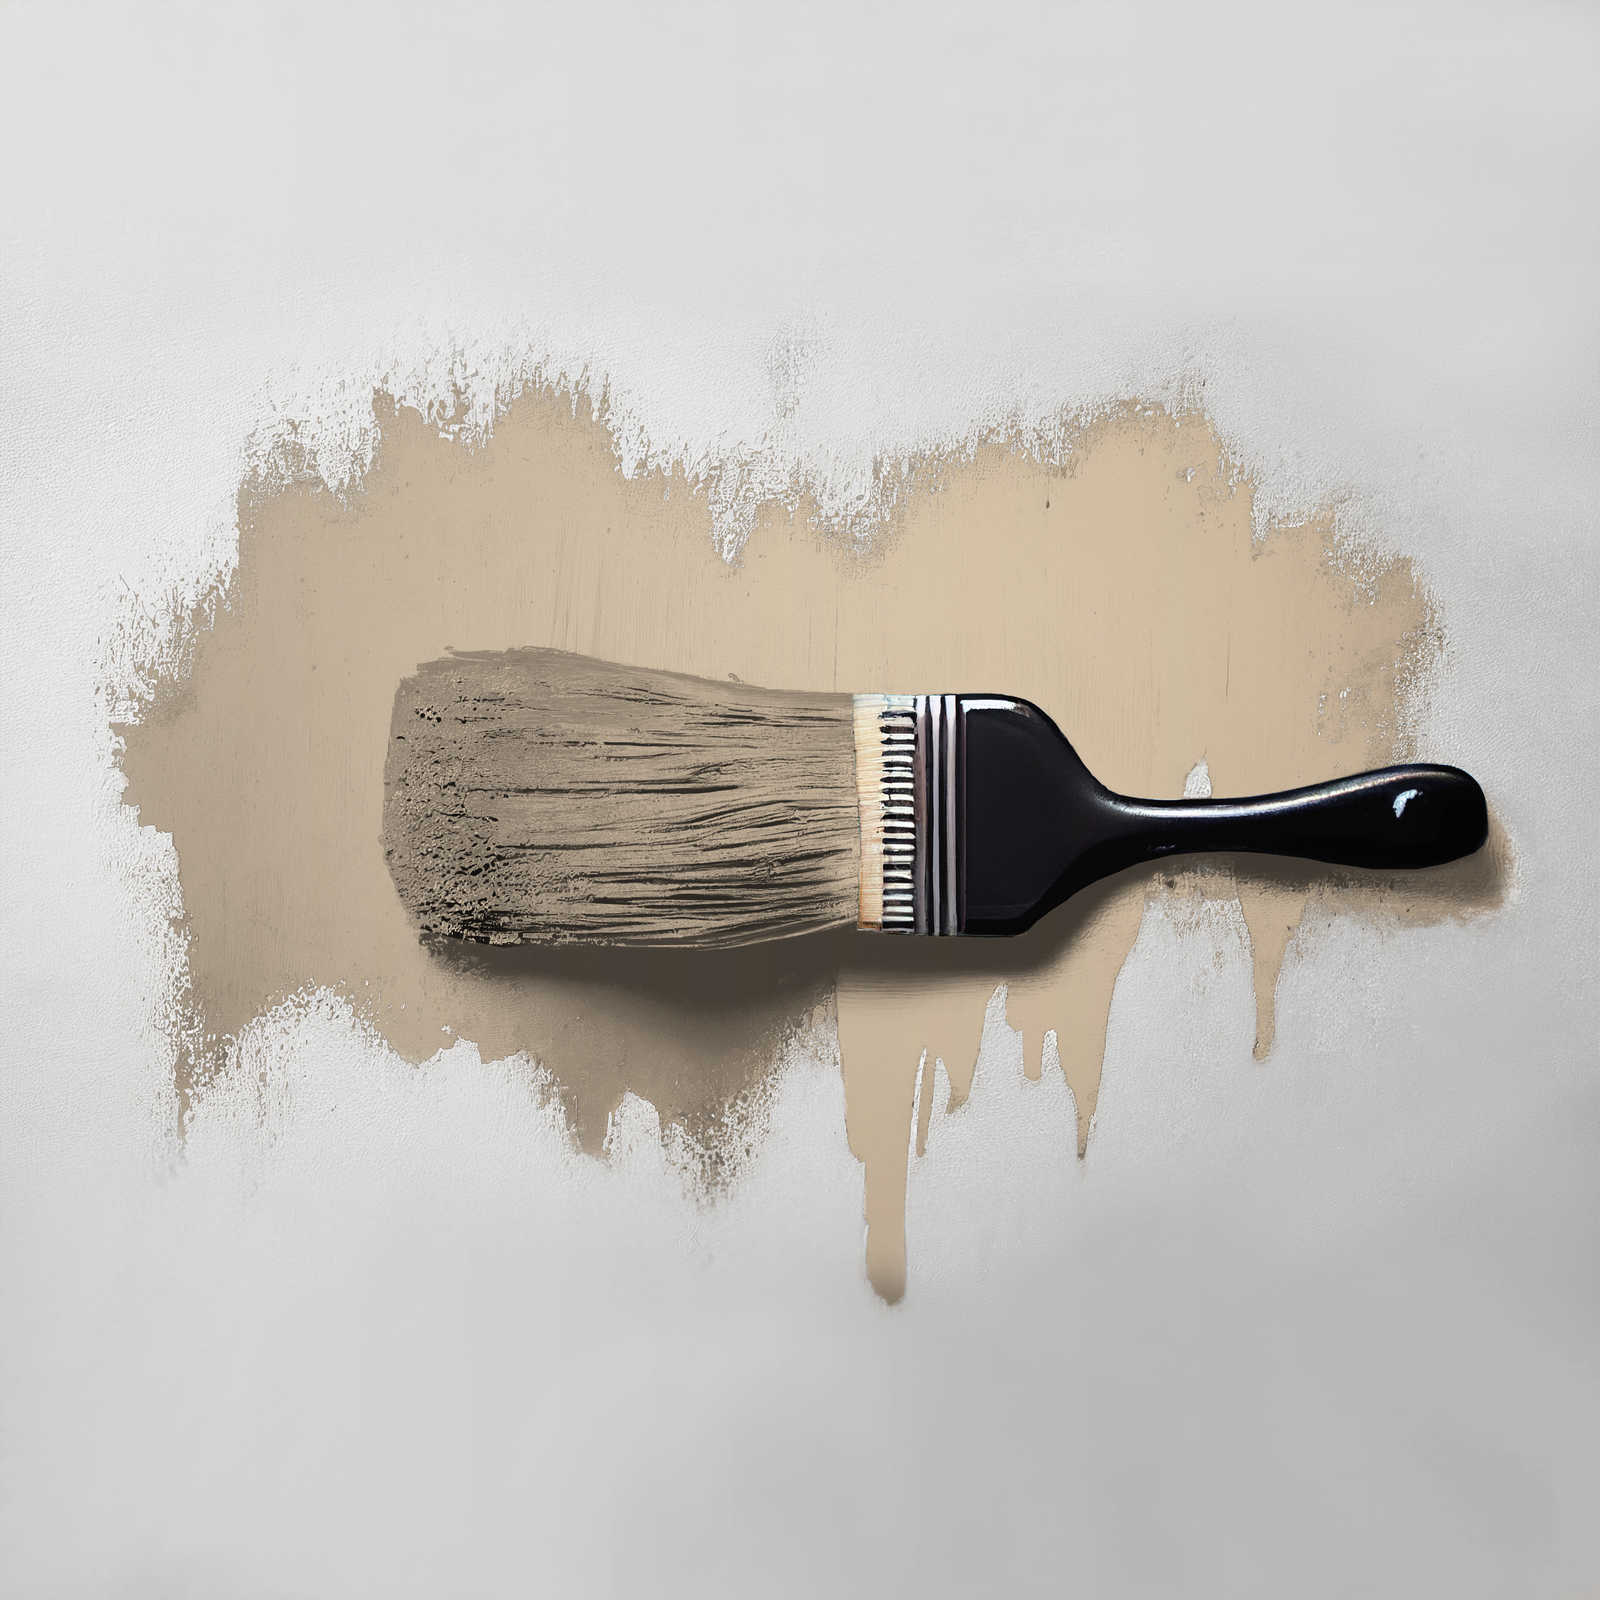             Peinture murale TCK6002 »Flat White Coffee« en beige chaud – 5,0 litres
        